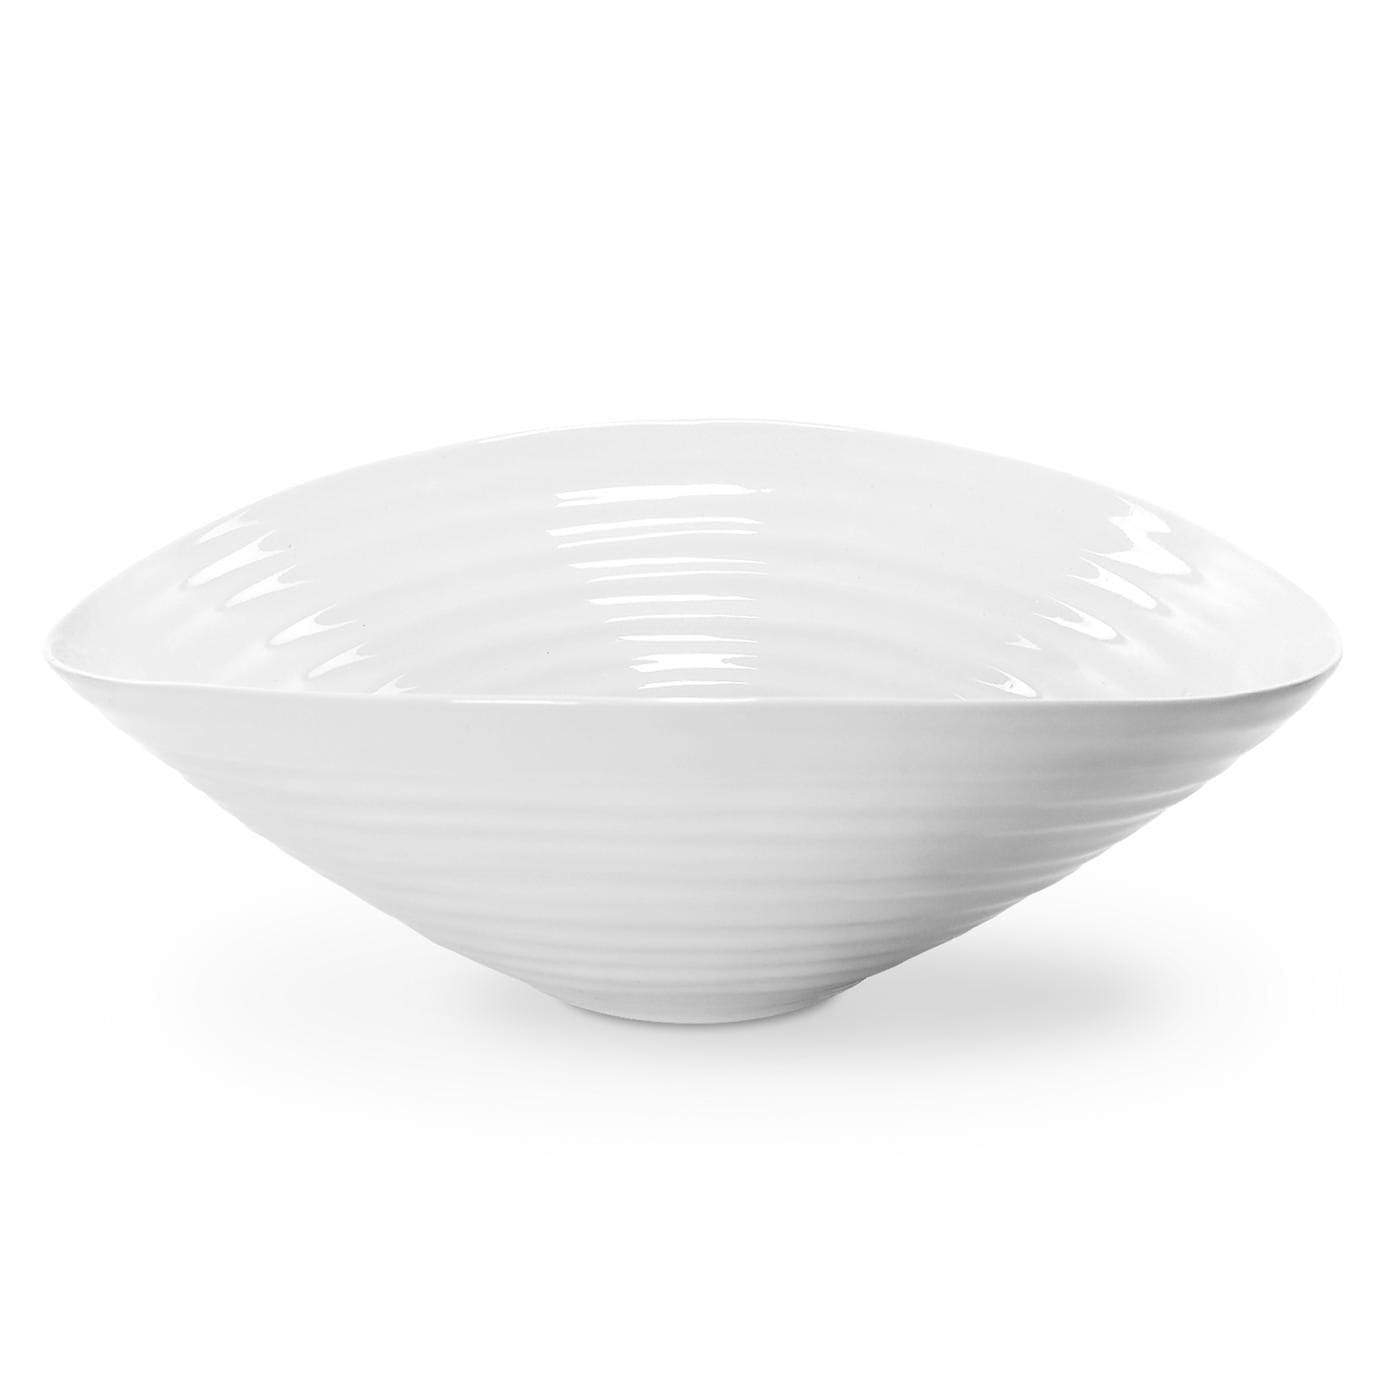 Sophie Conran for Portmeirion White Salad Bowl – Large